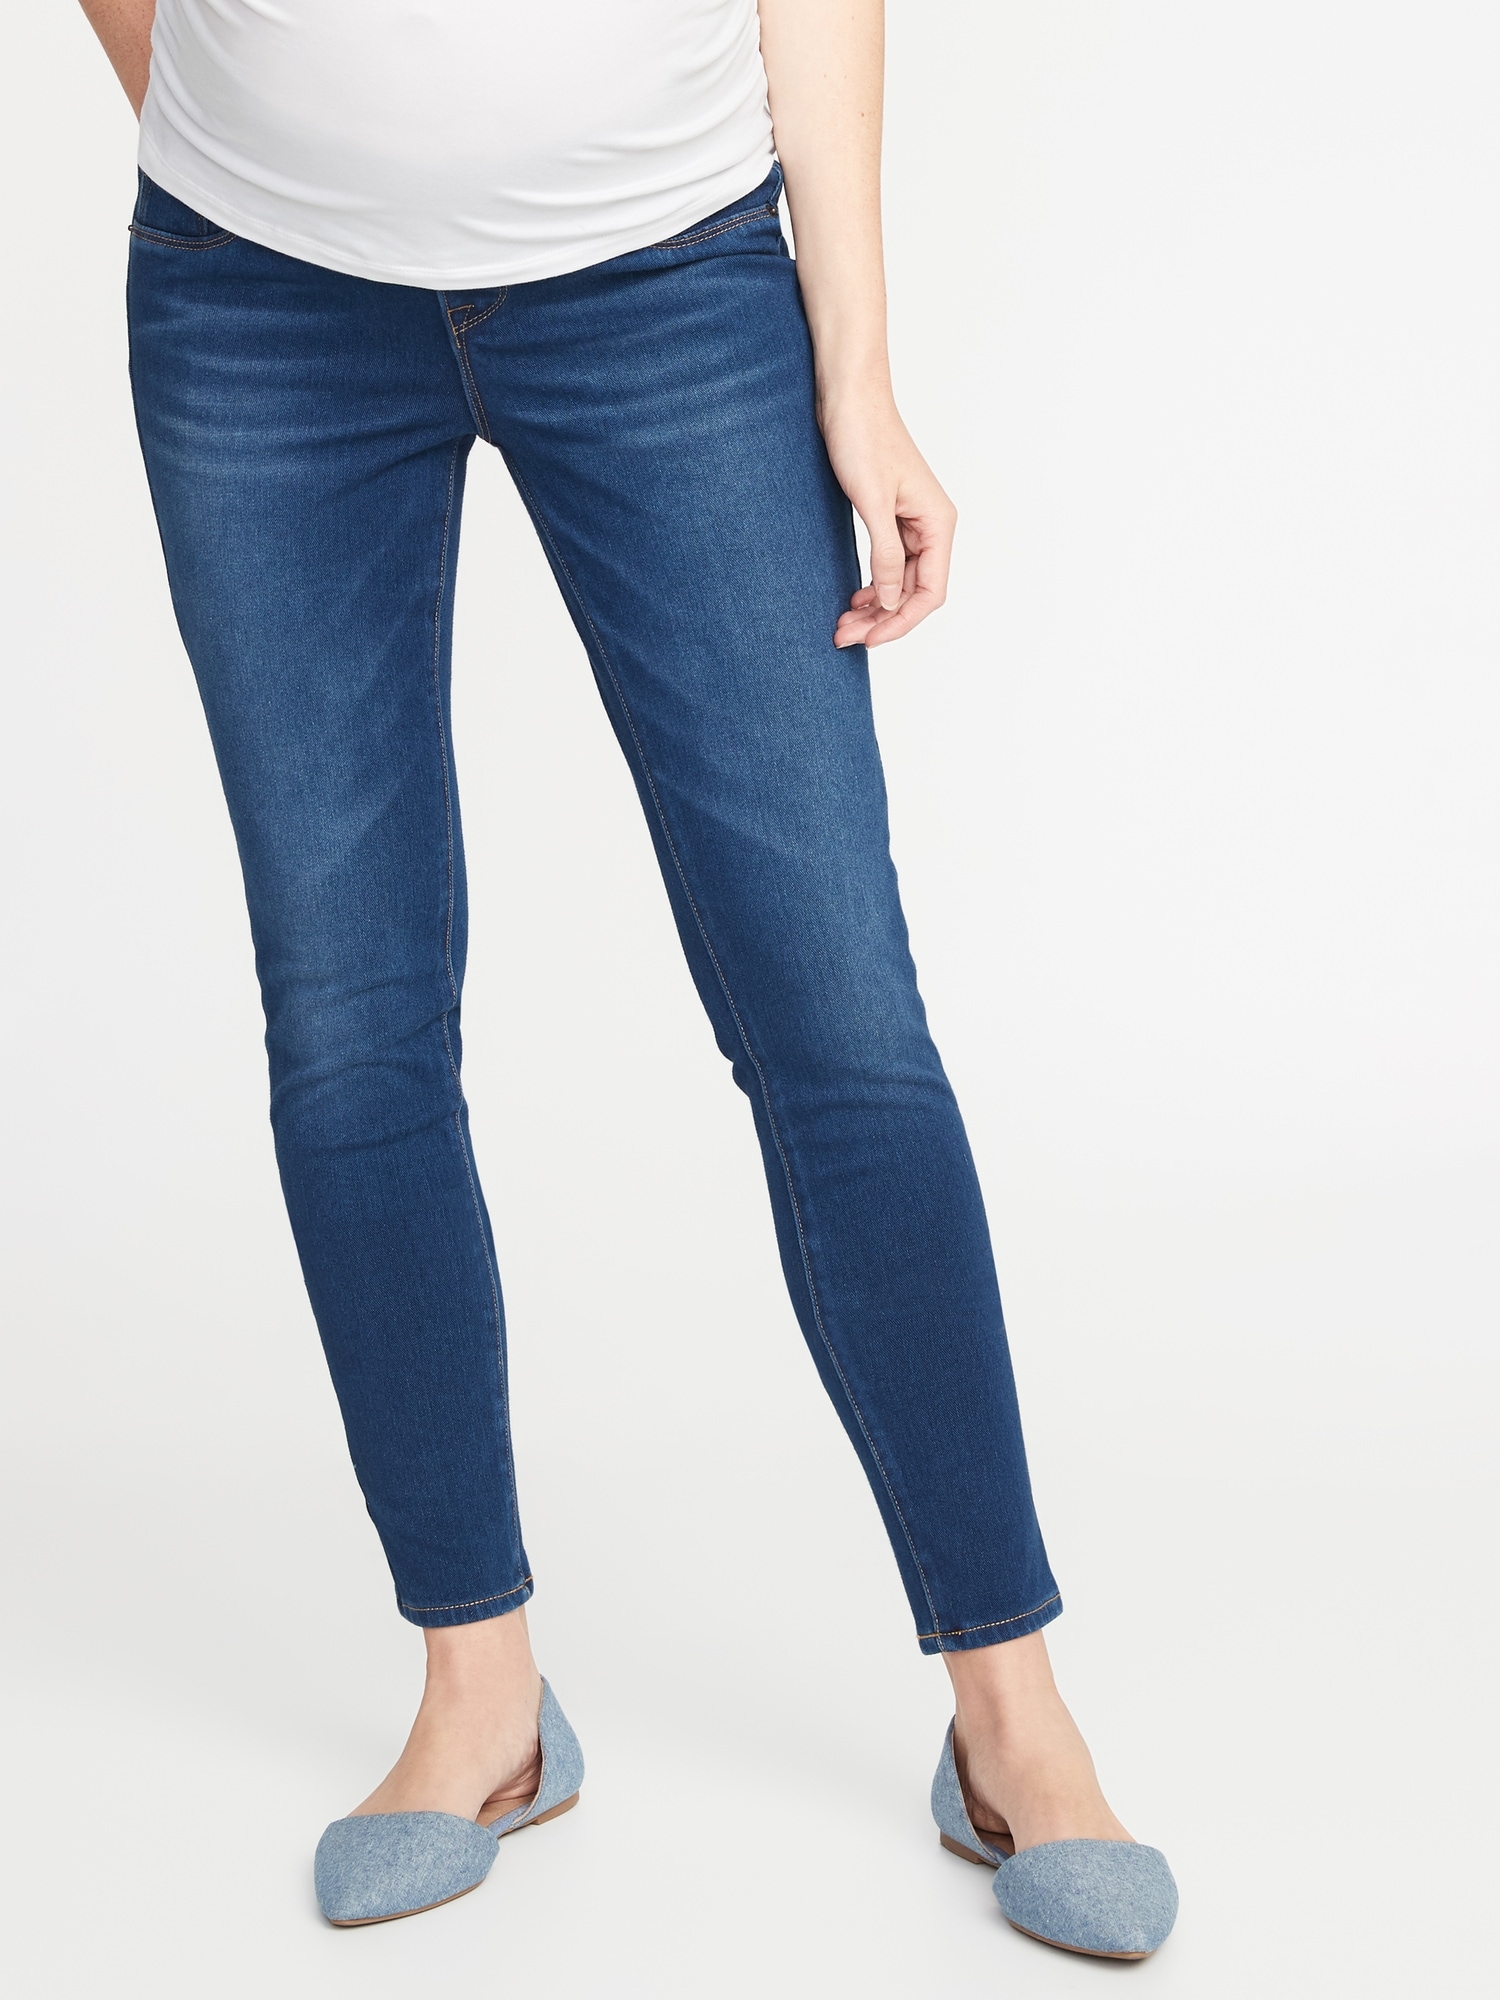 old navy rockstar jeans elastic waist